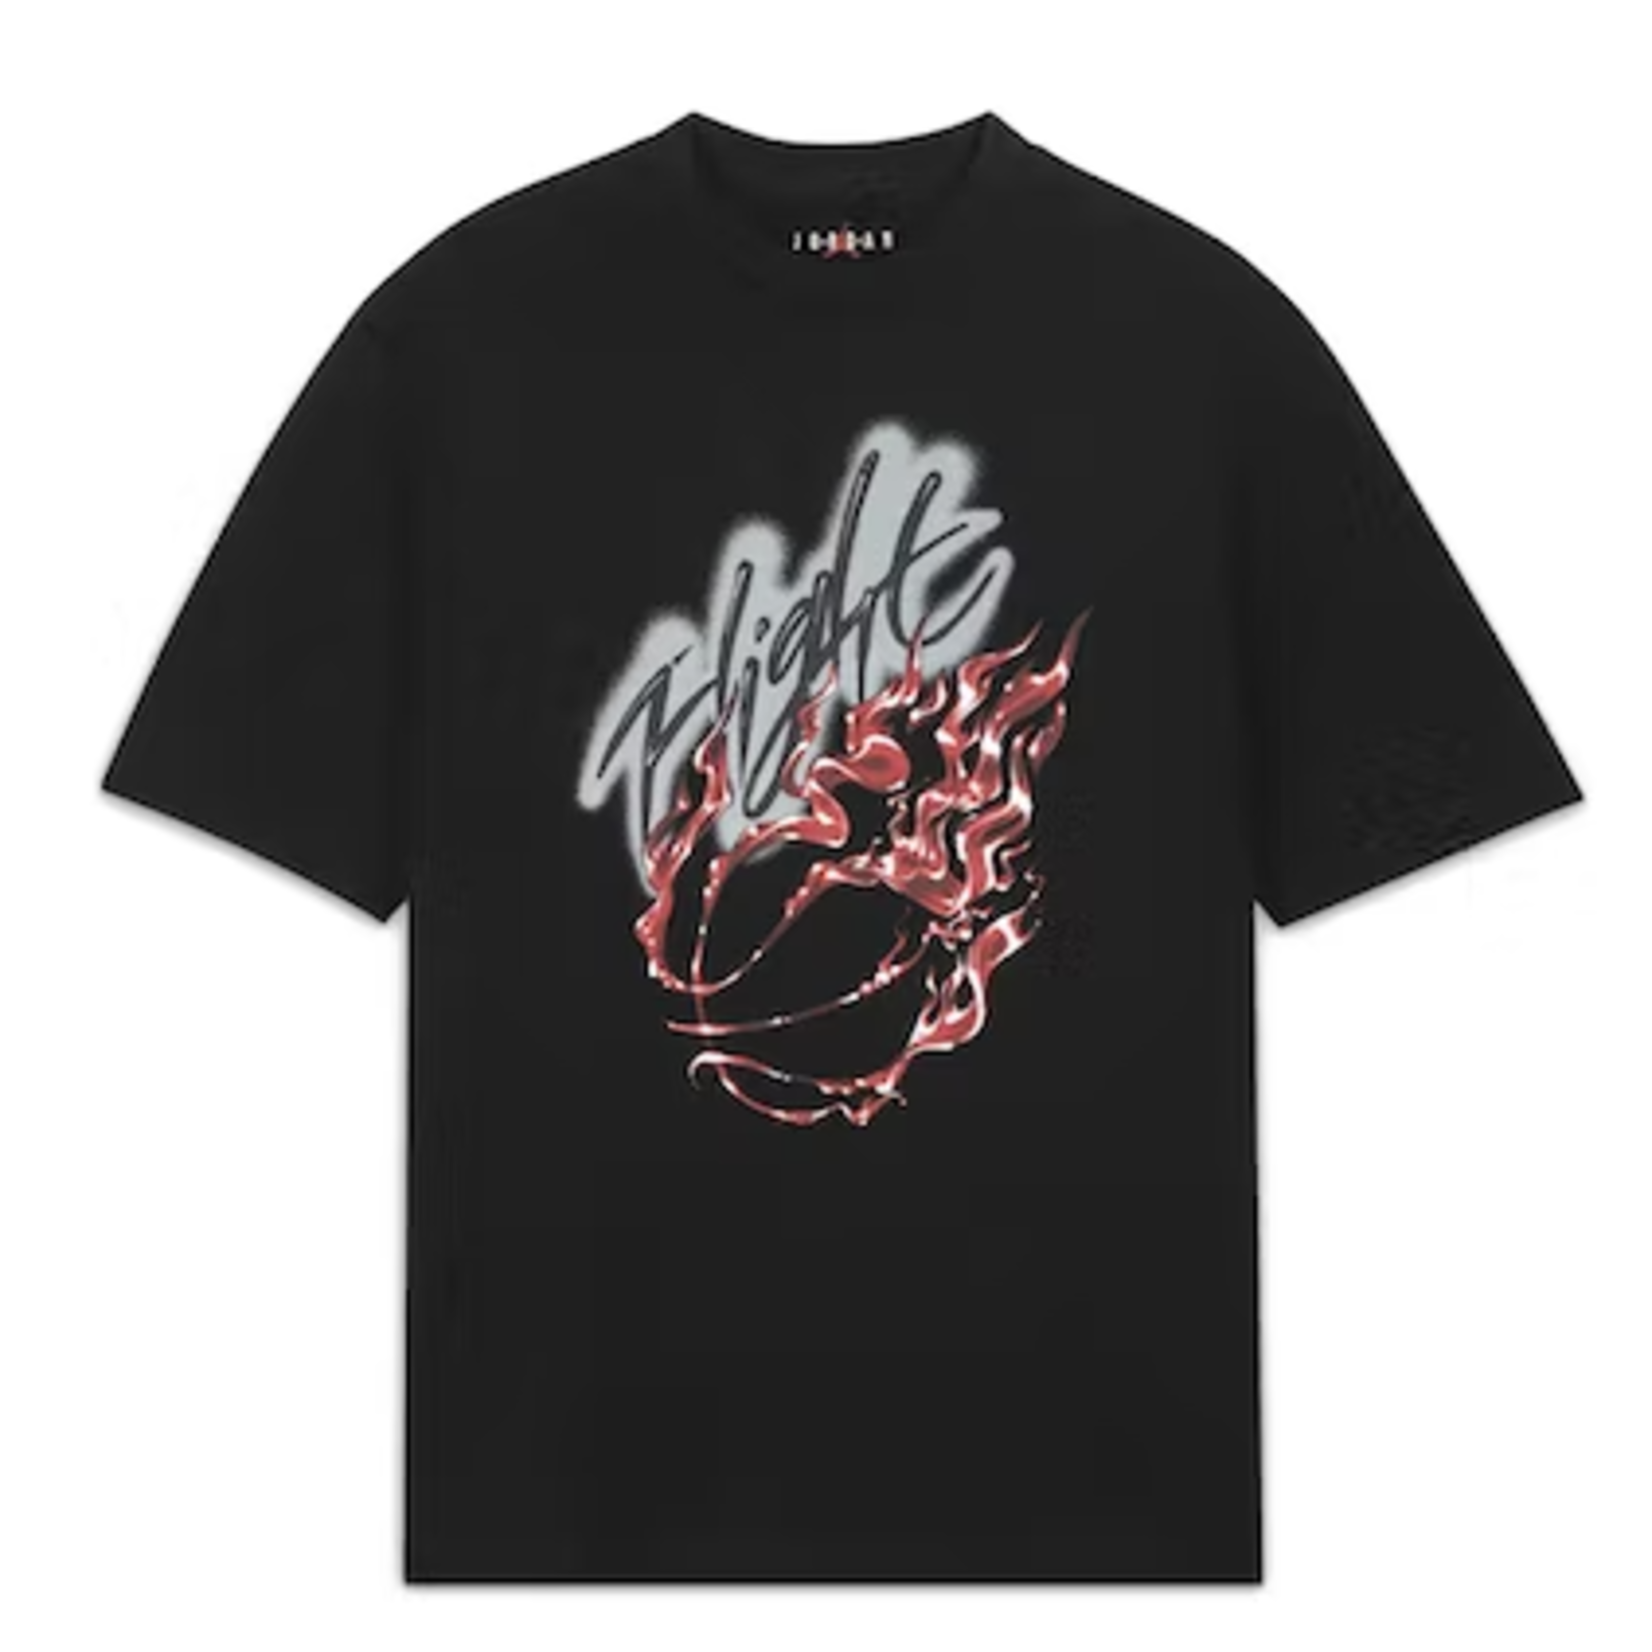 Travis Scott X Jordan Flight Graphic T-Shirt Black Size Medium, DS BRAND NEW